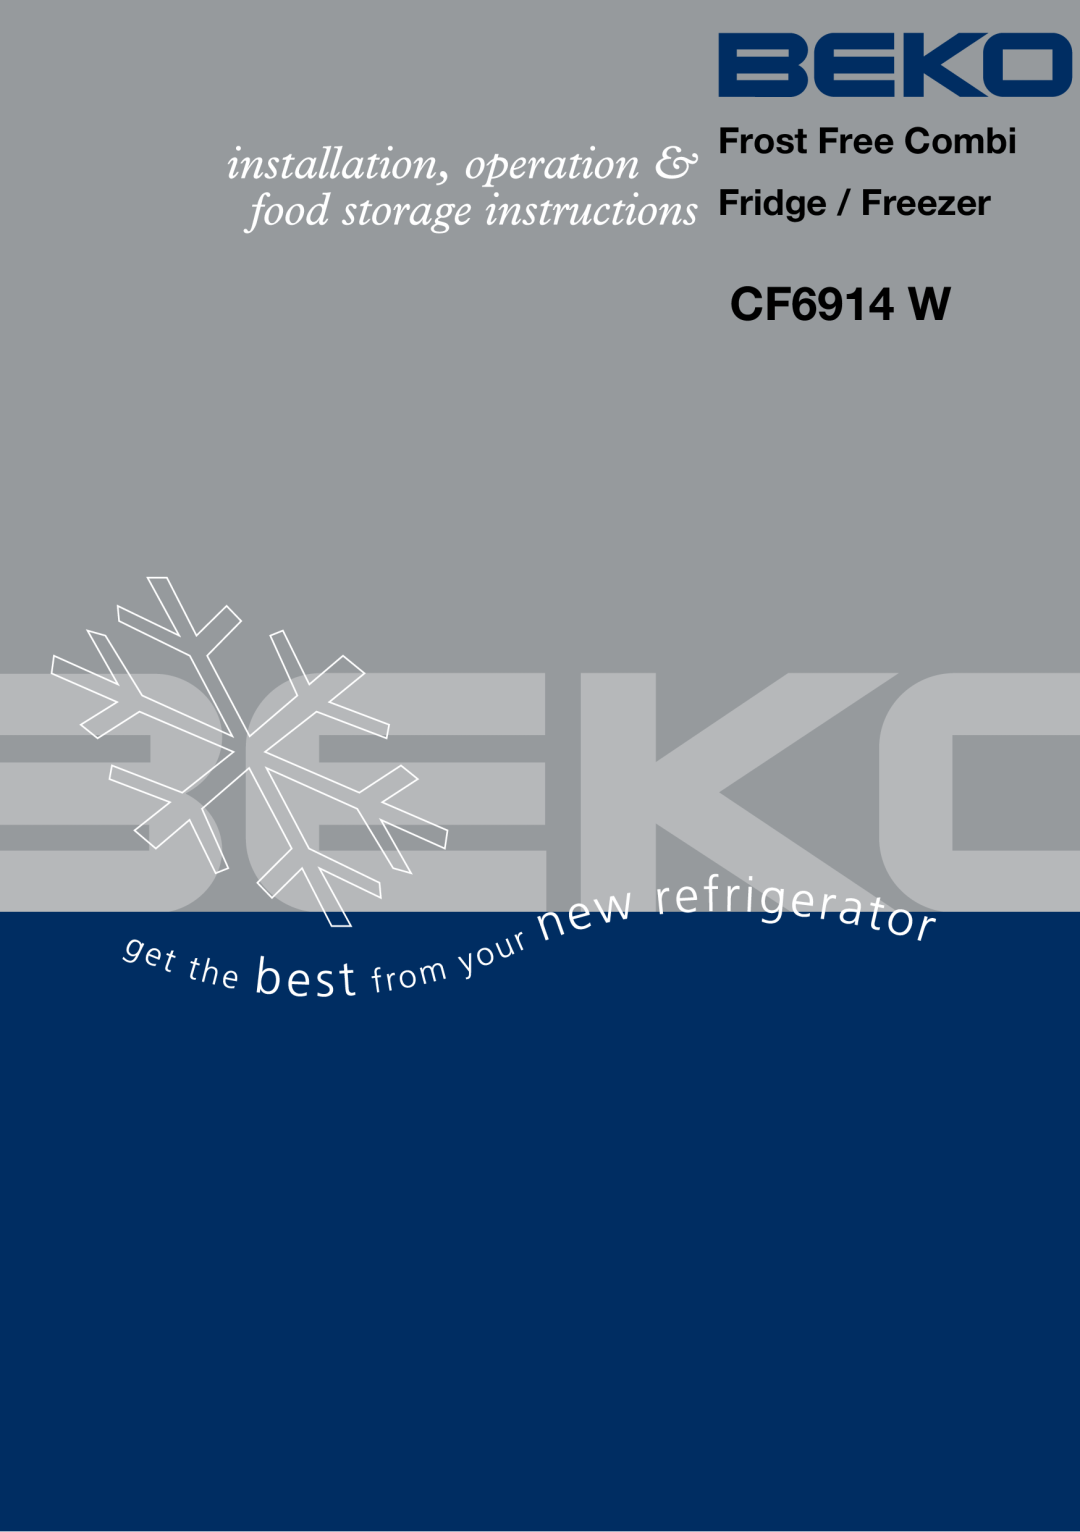 Beko CF6914 W manual Frost Free Combi Fridge / Freezer 